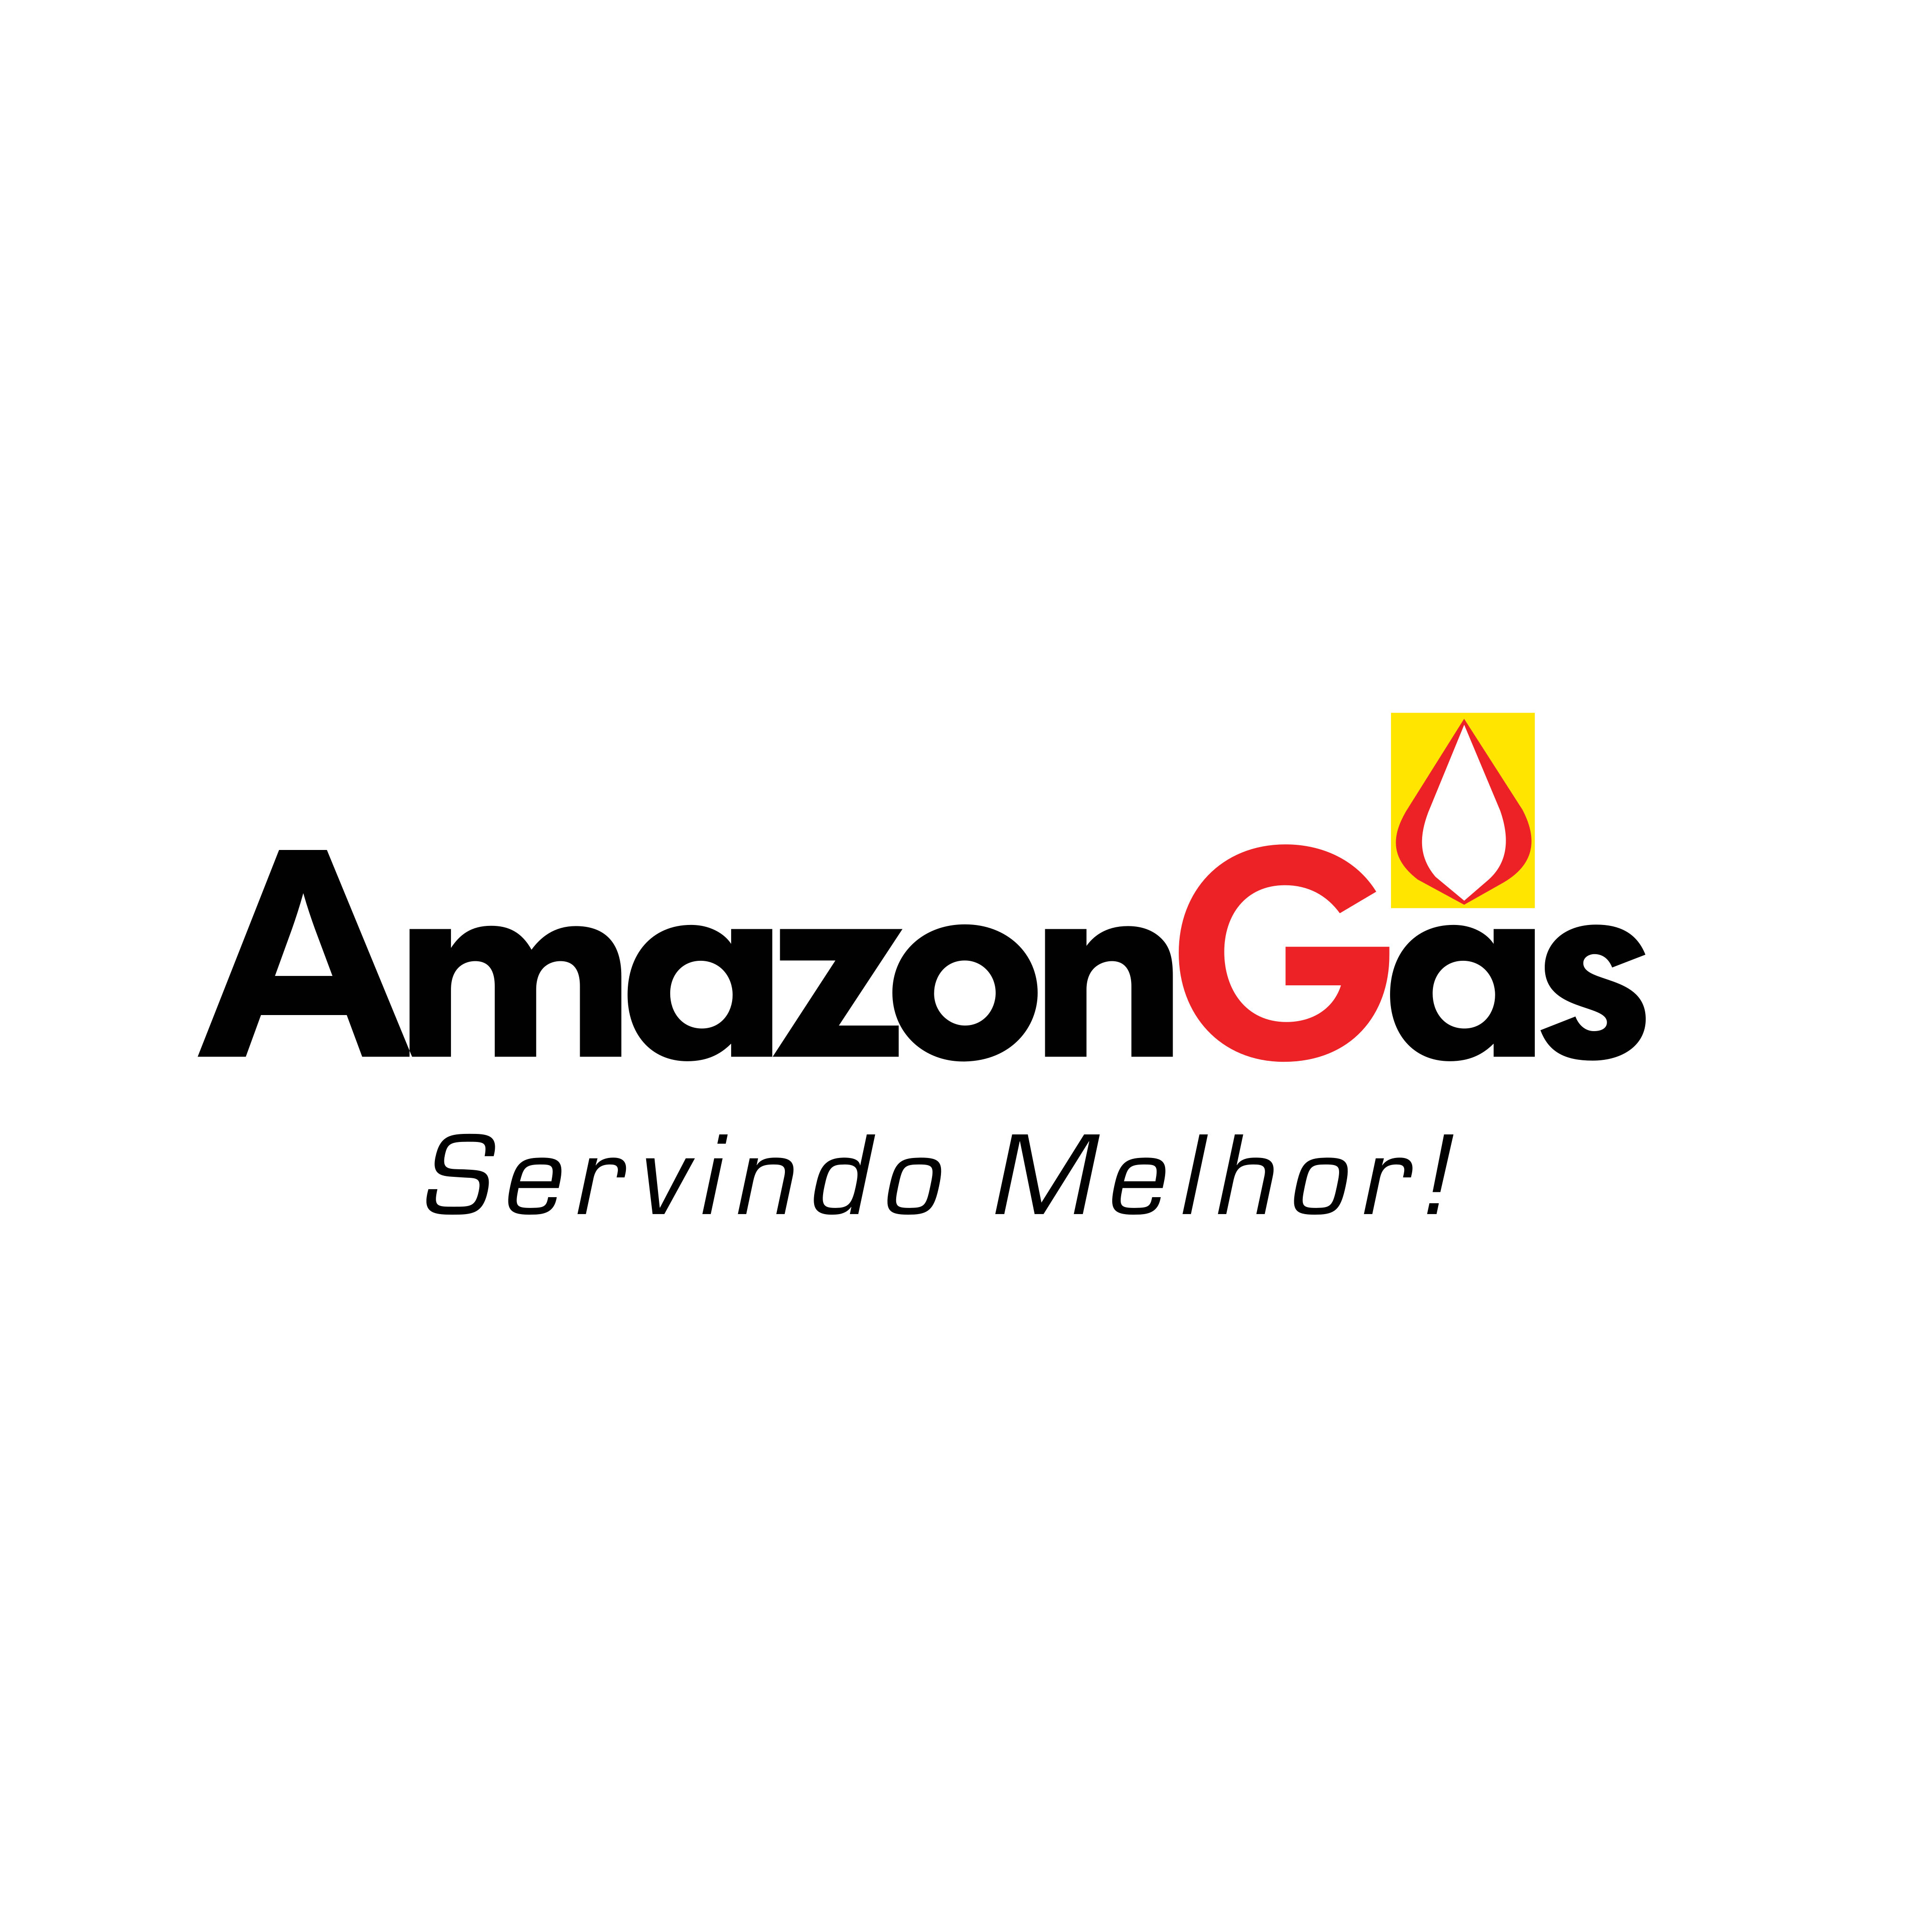 AmazonGás Logo PNG.